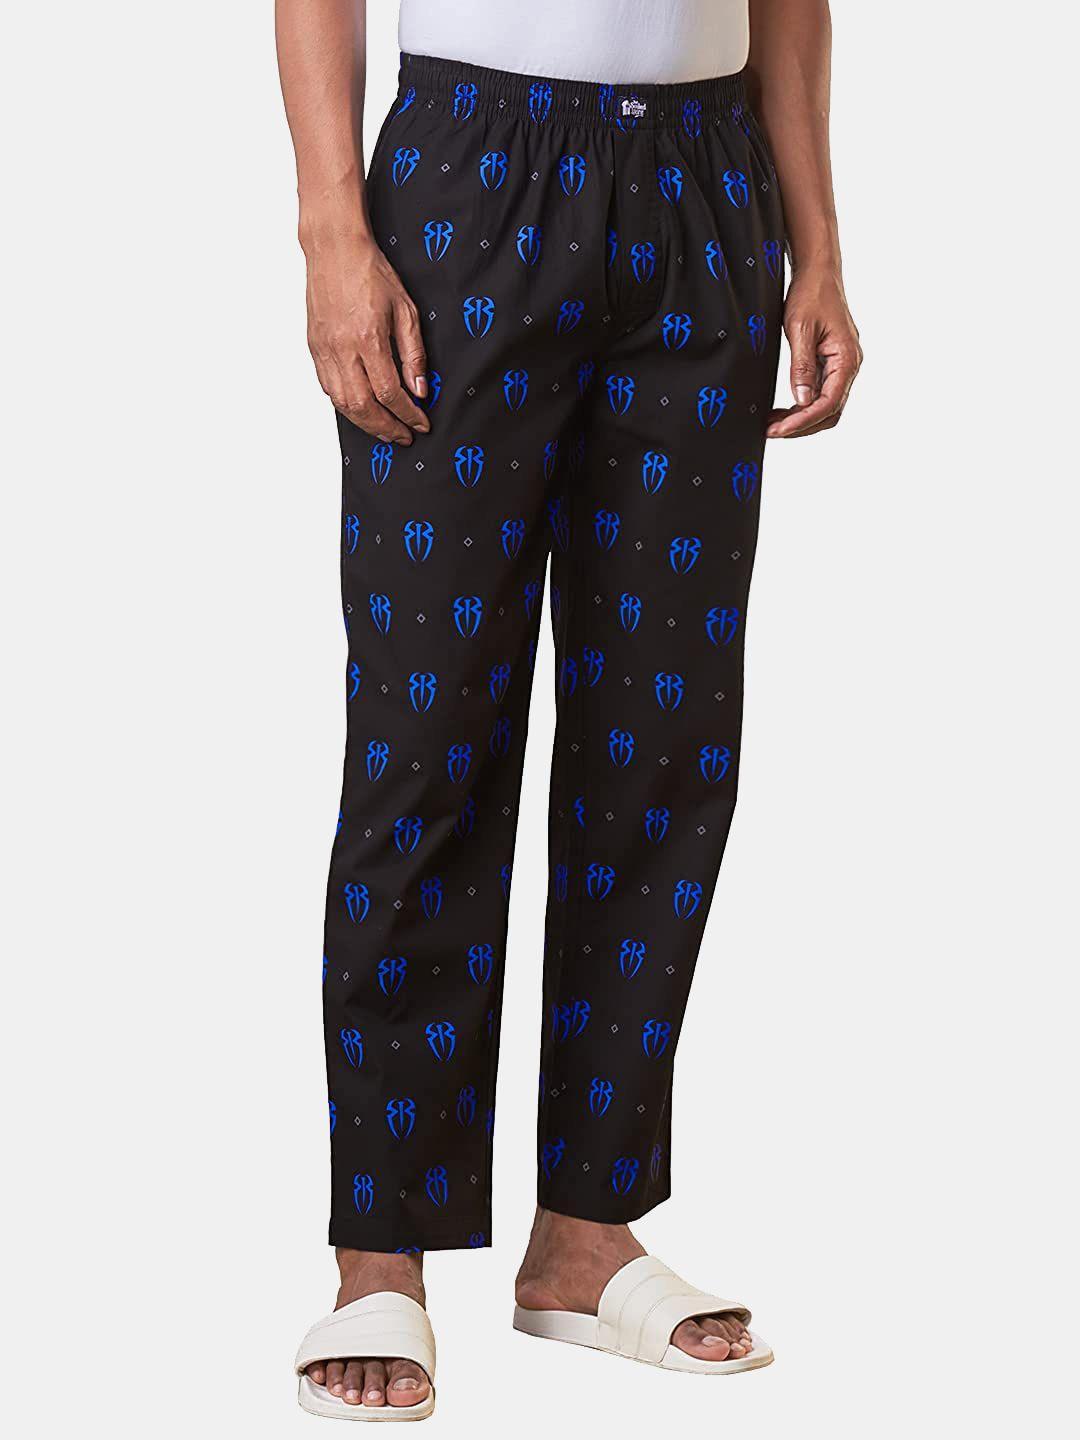 the souled store men black & blue roman reigns logo printed cotton lounge pant